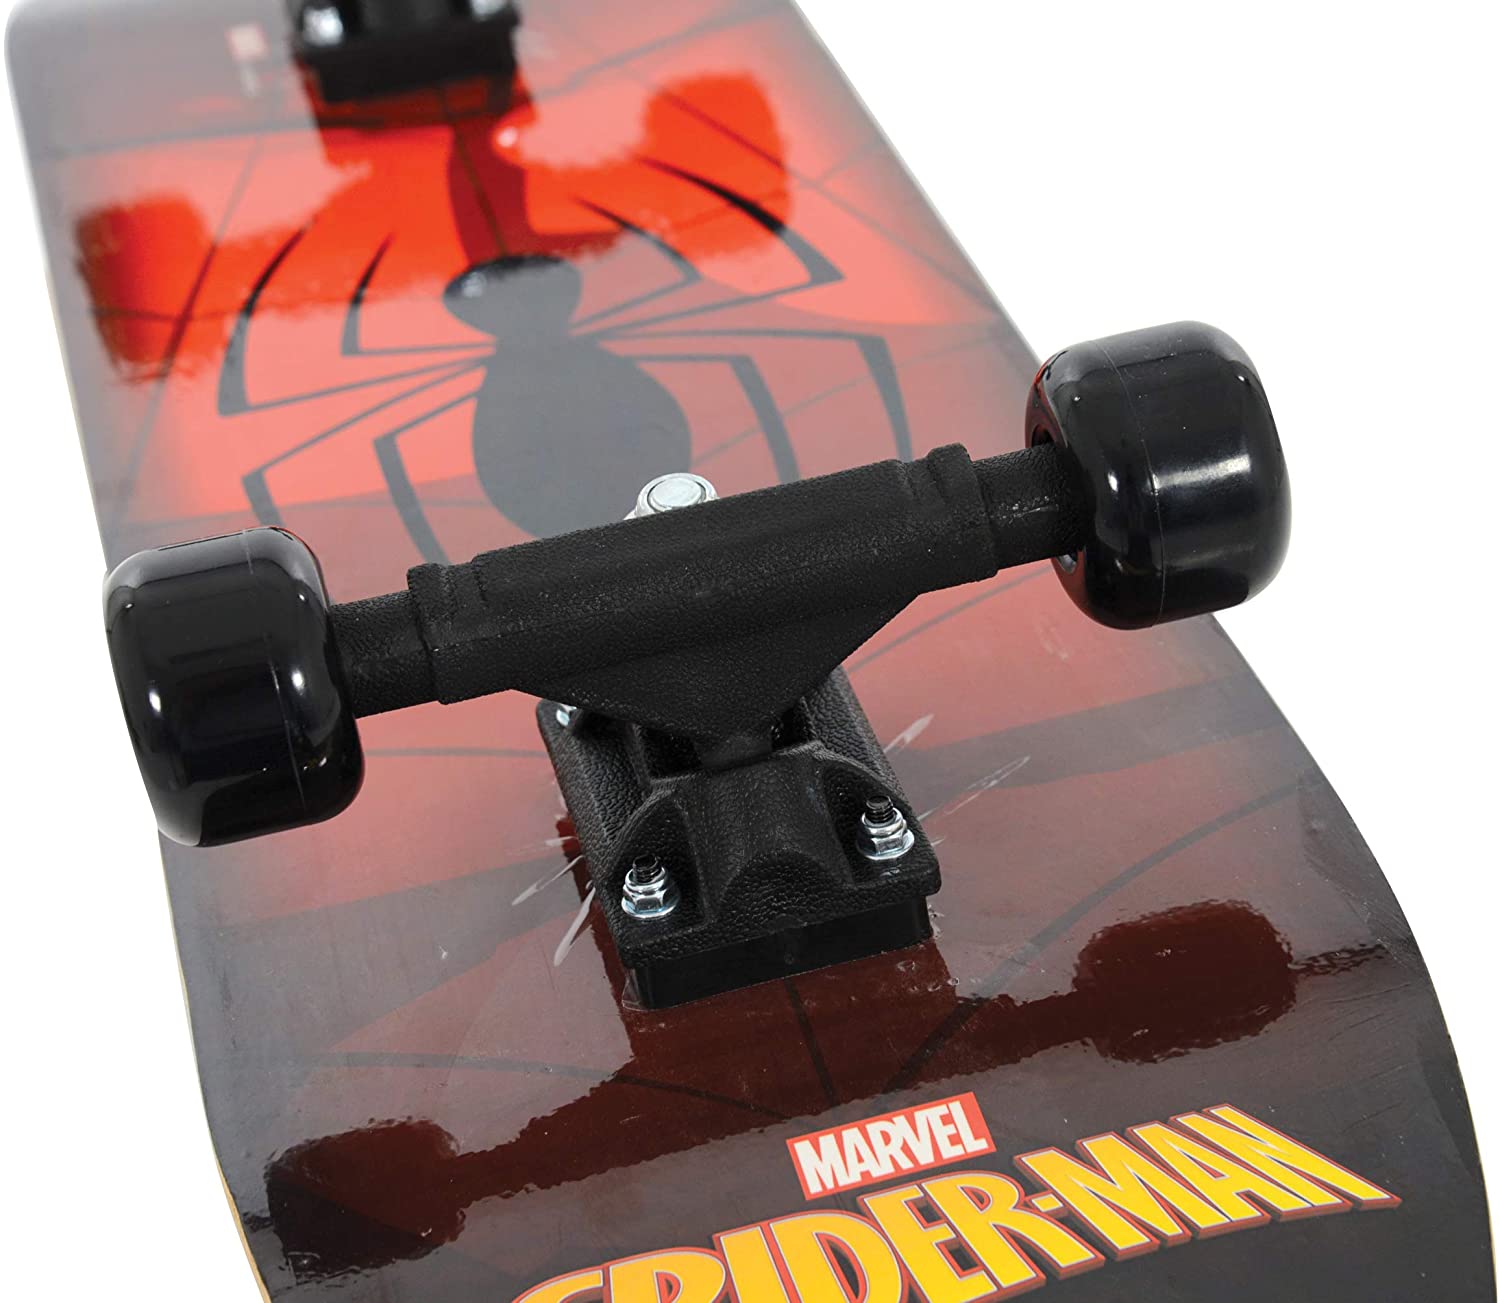 Spiderman Skateboard